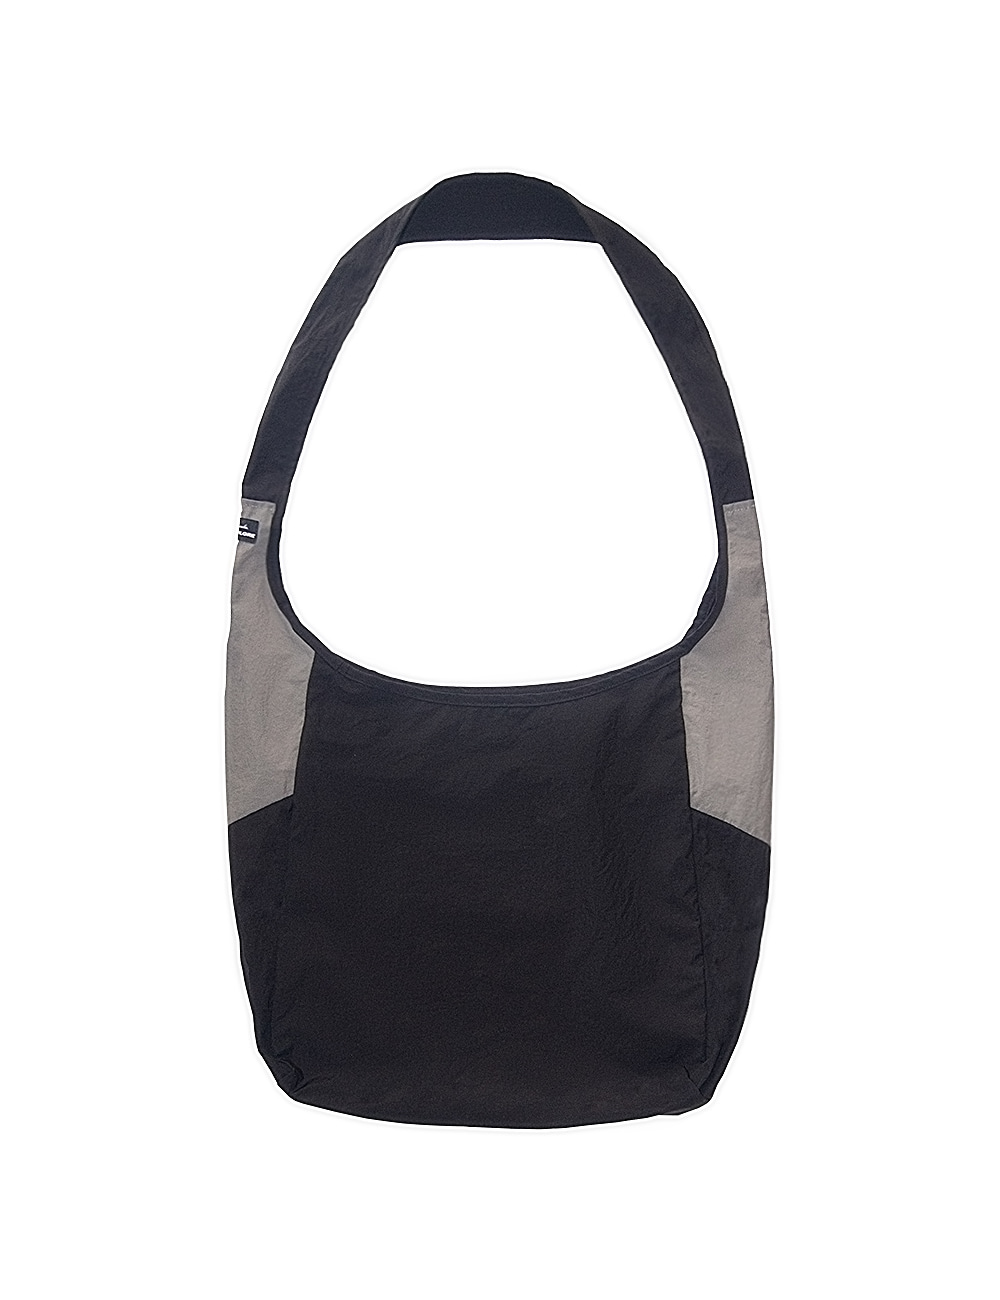 002 Foldable Cross Bag *Recycled Nylon Black